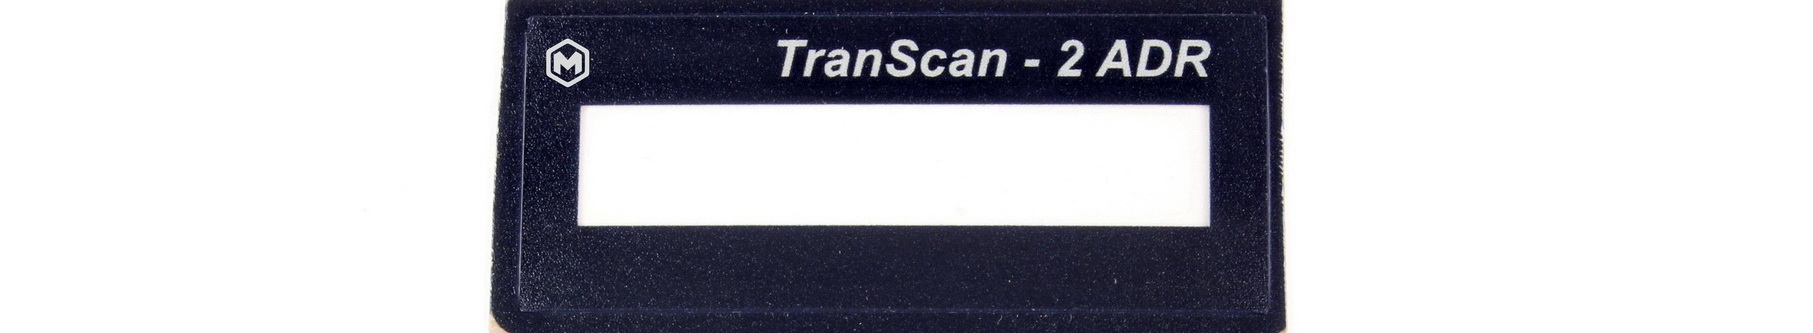 TRANSCAN TRAILER 2ADR LABEL (MRD-LB-1474)